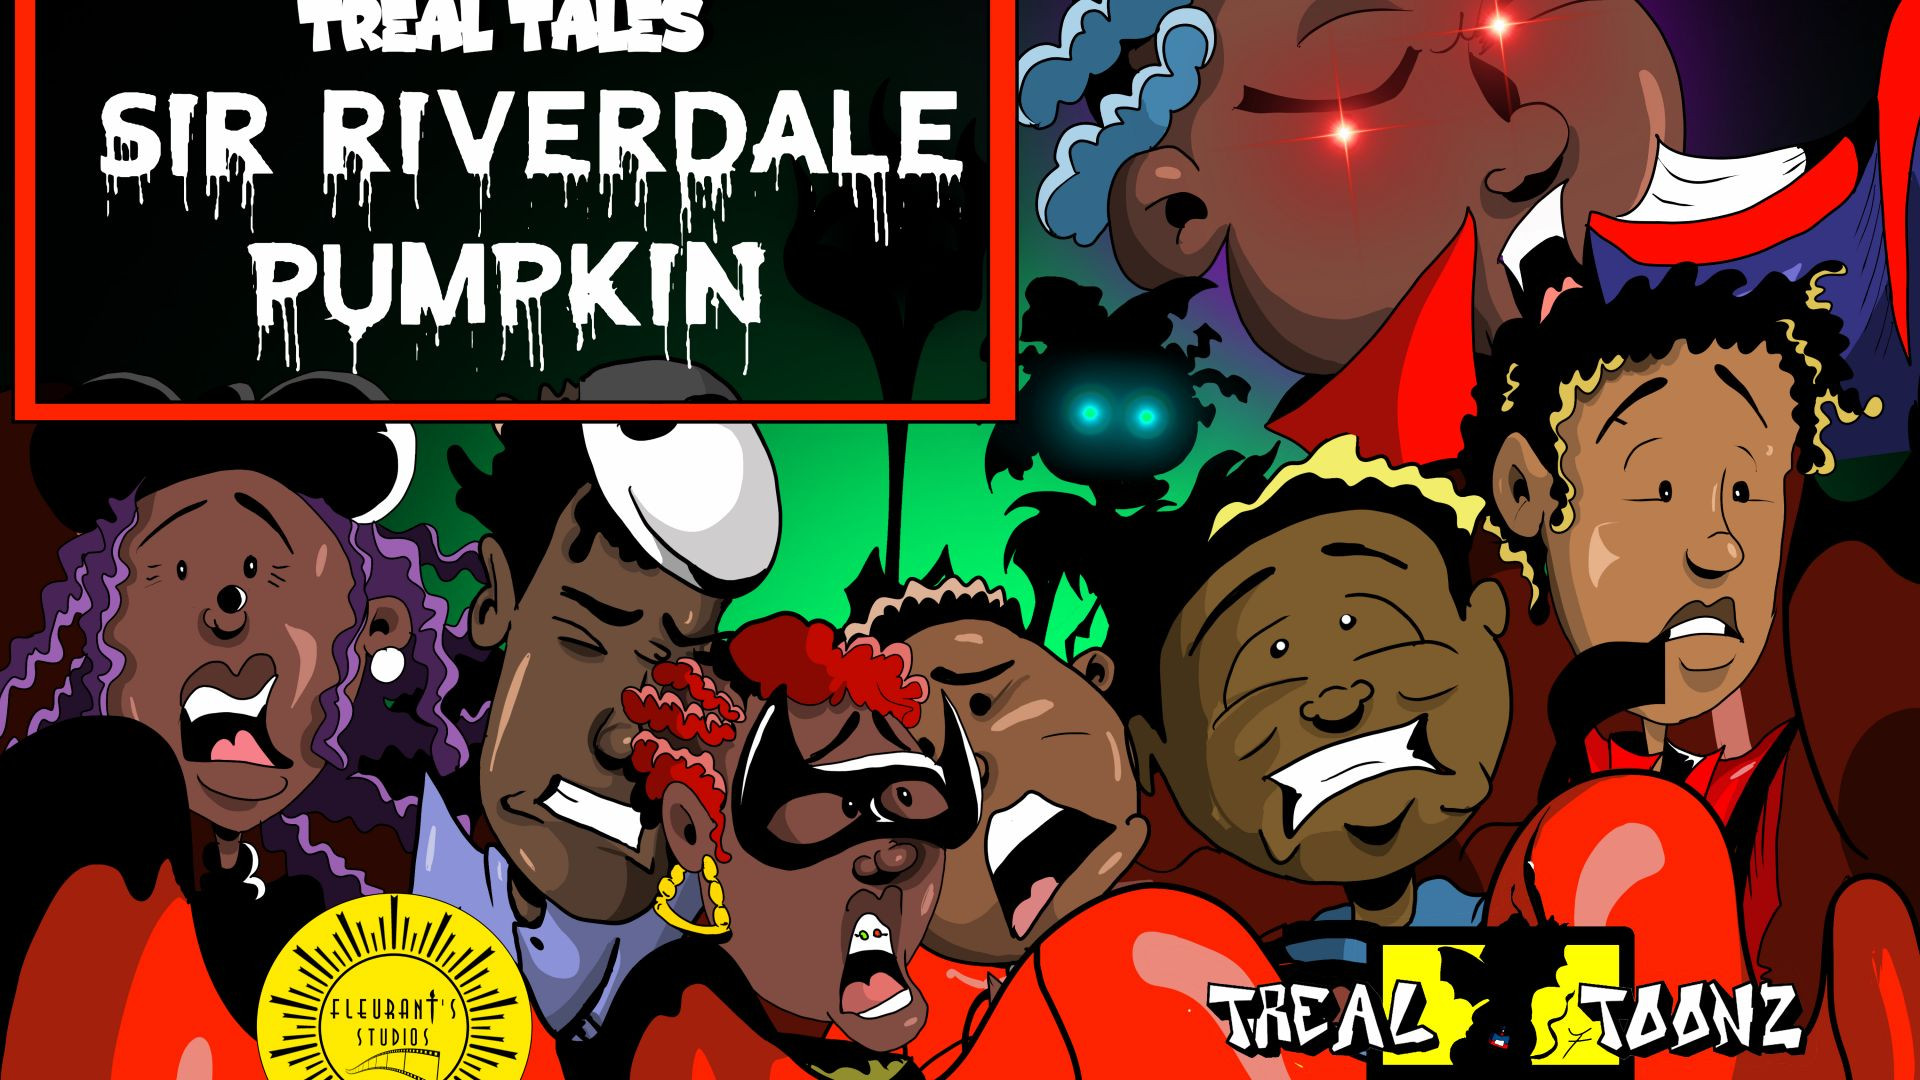 ⁣TREAL TALES: Sir Riverdale Pumpkin!!!